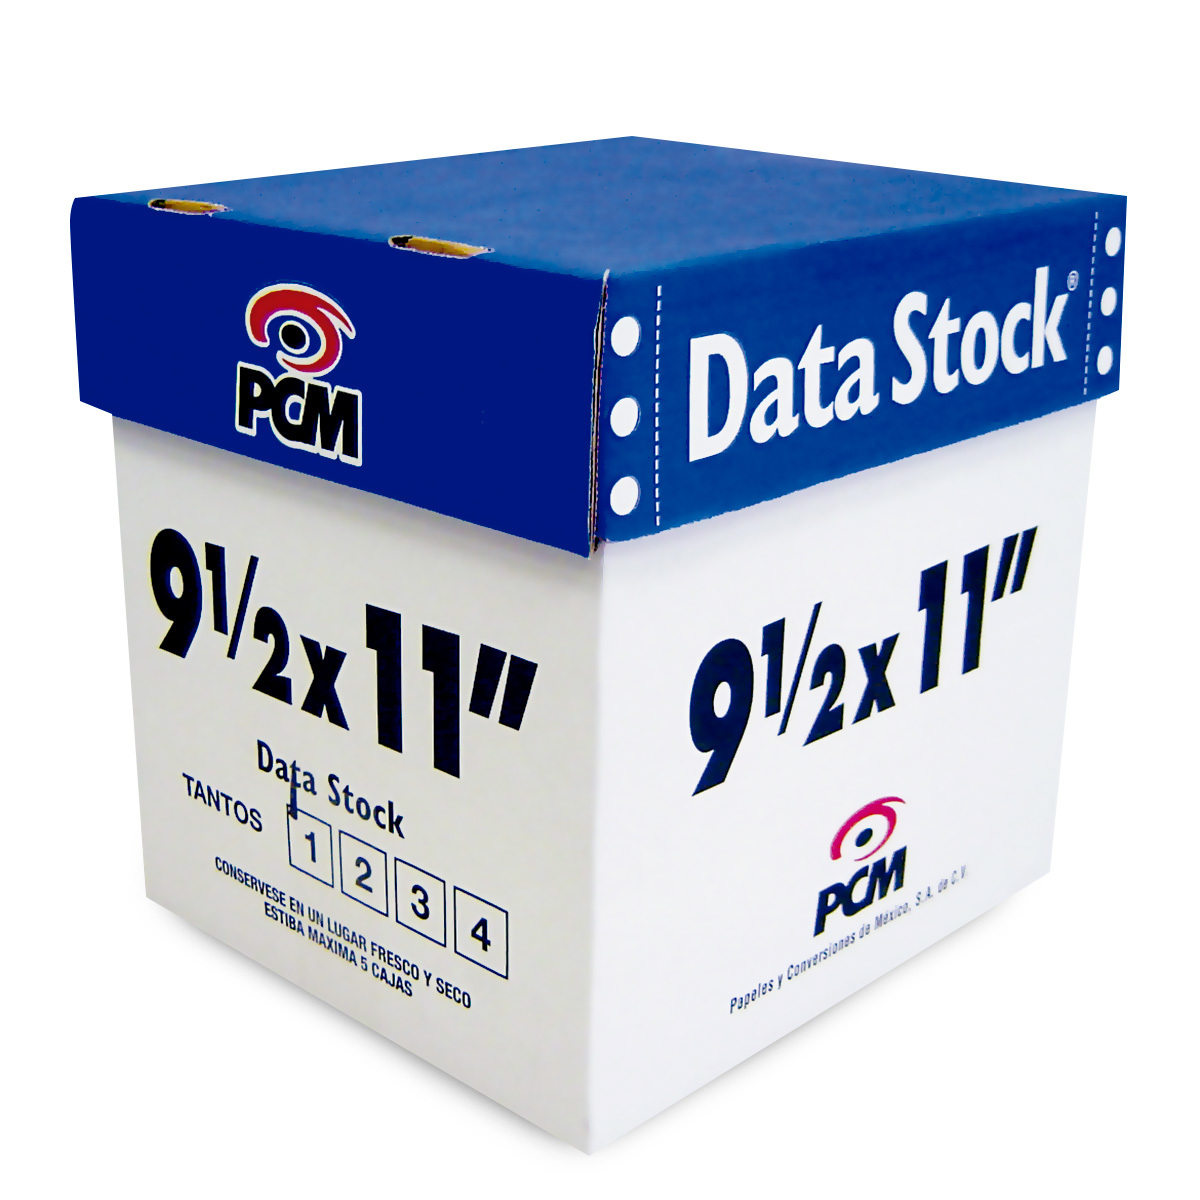 Papel Stock Forma Continua PCM DS00121500B 1500 hojas 2 tantos Carta Blanco  | Office Depot Mexico